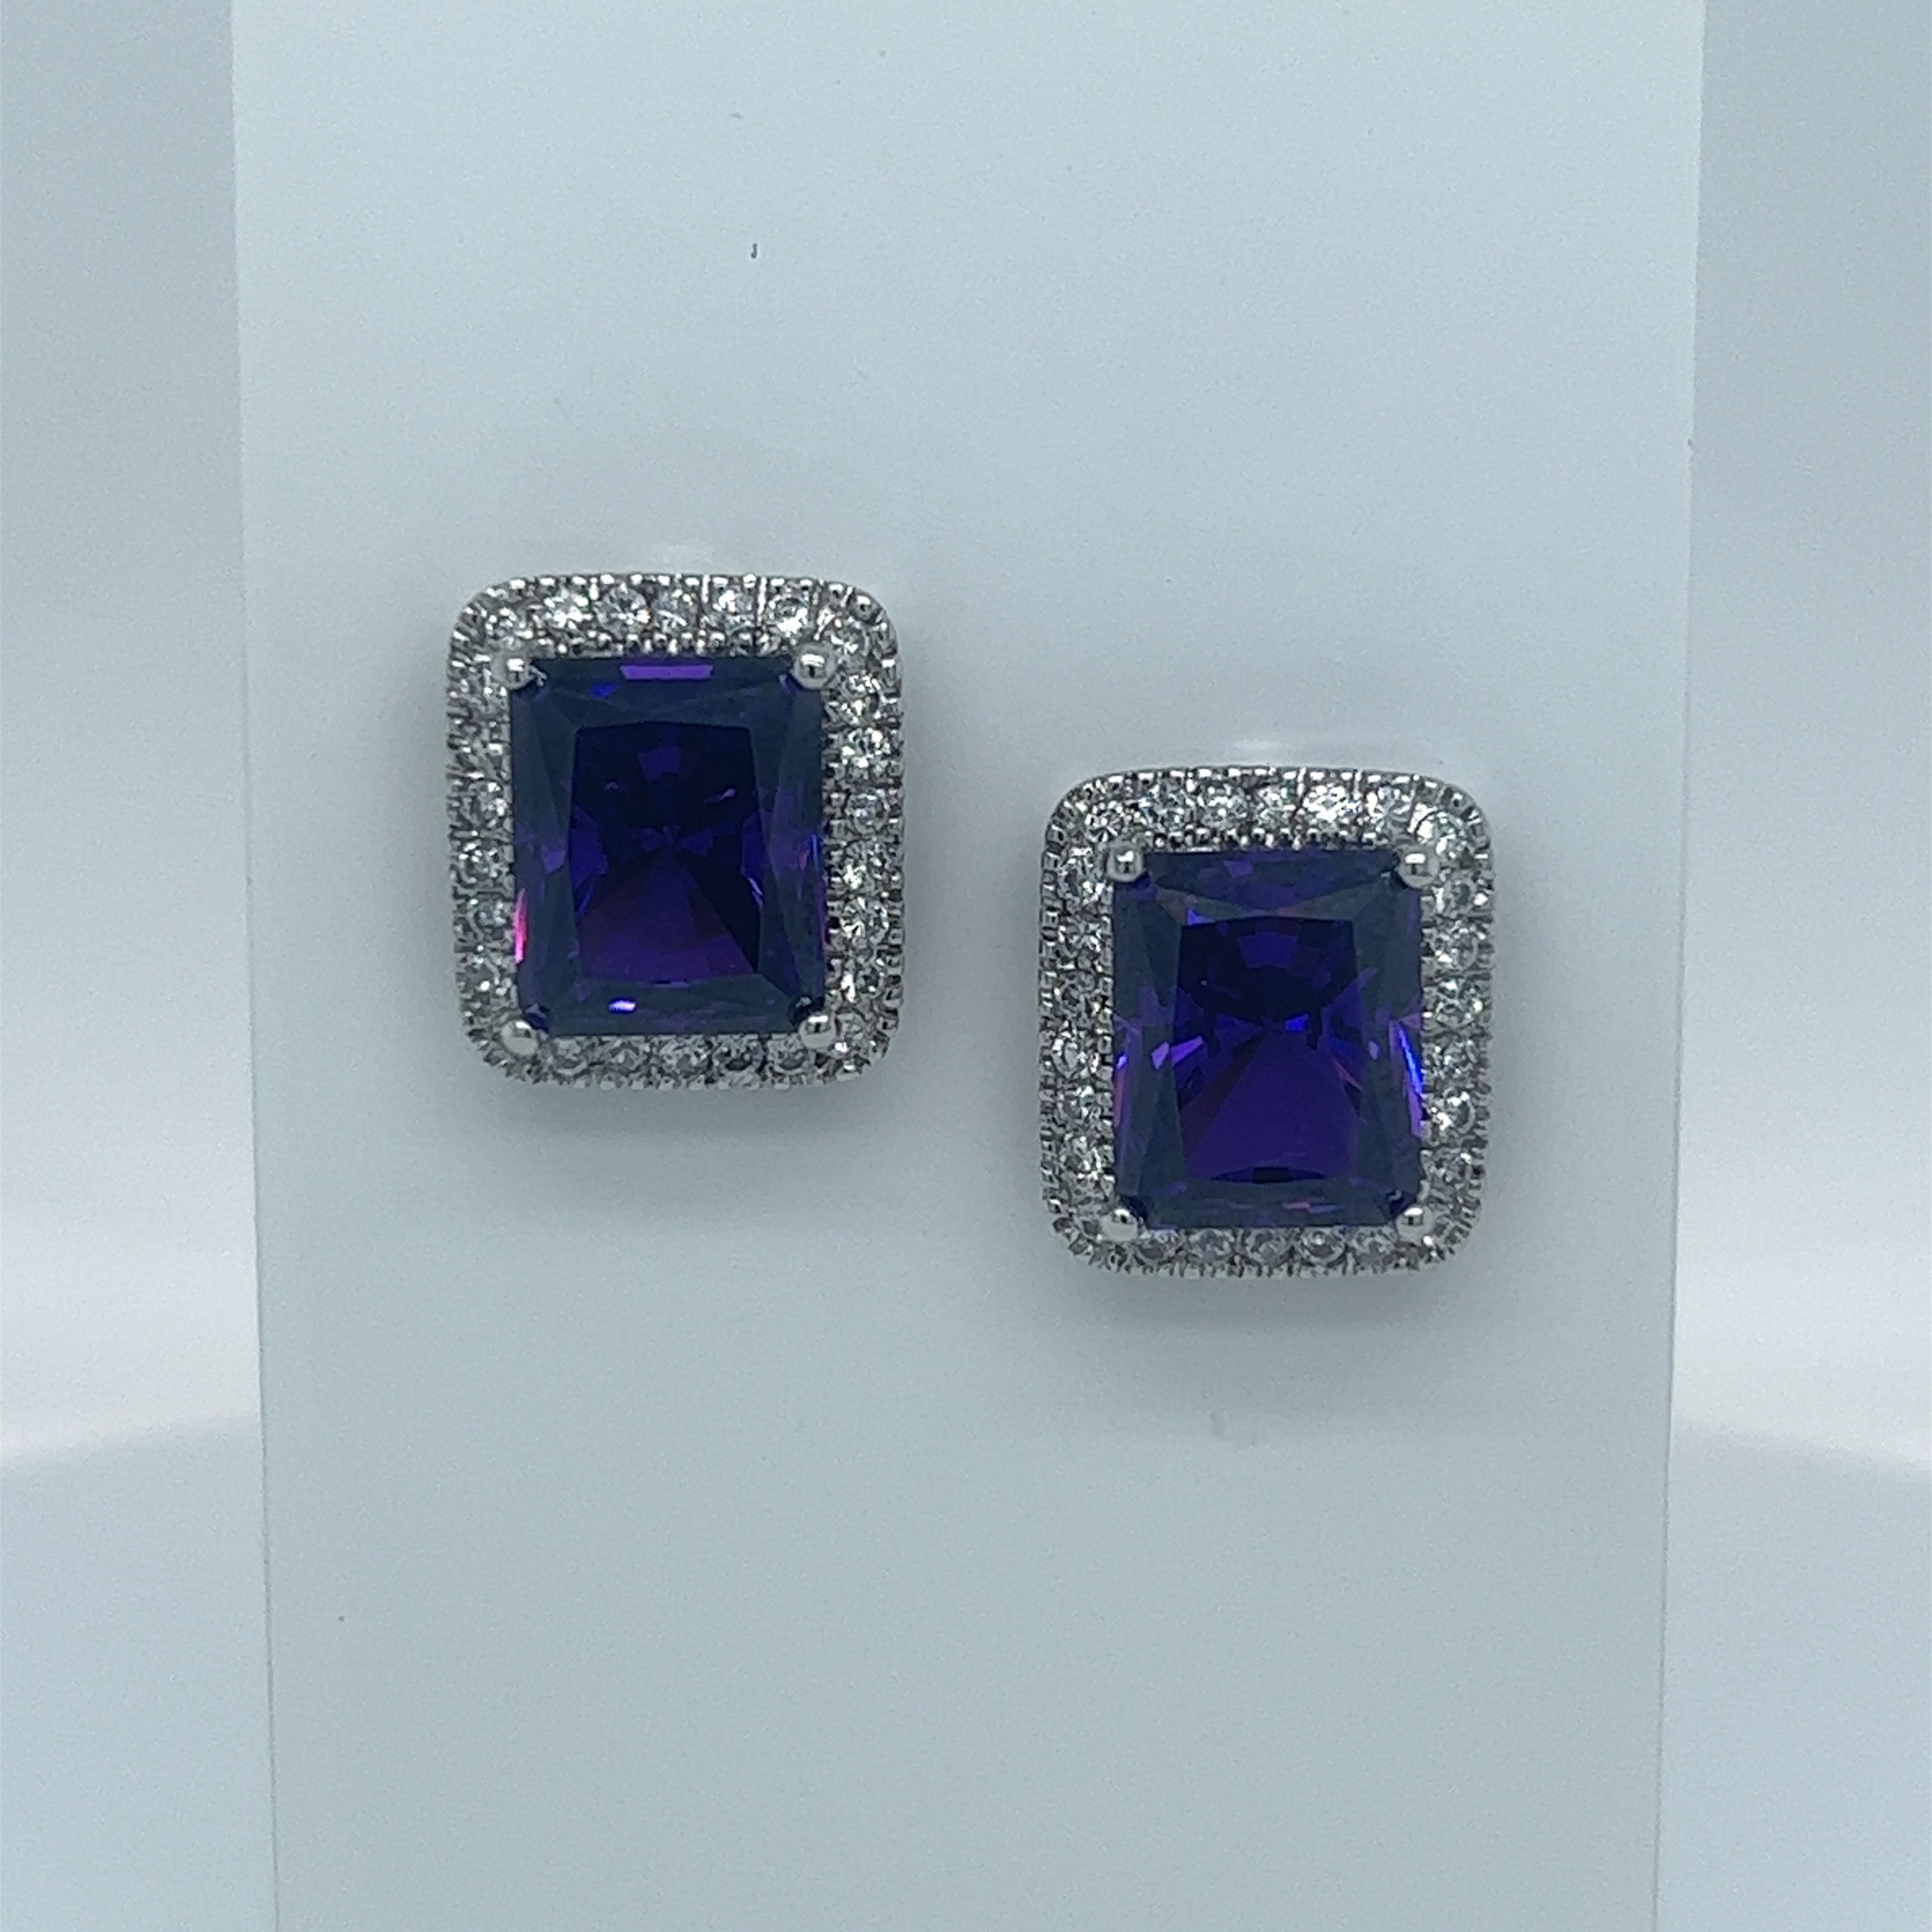 Sterling Silver and Emerald-cut Purple Cubic Zirconia Earrings